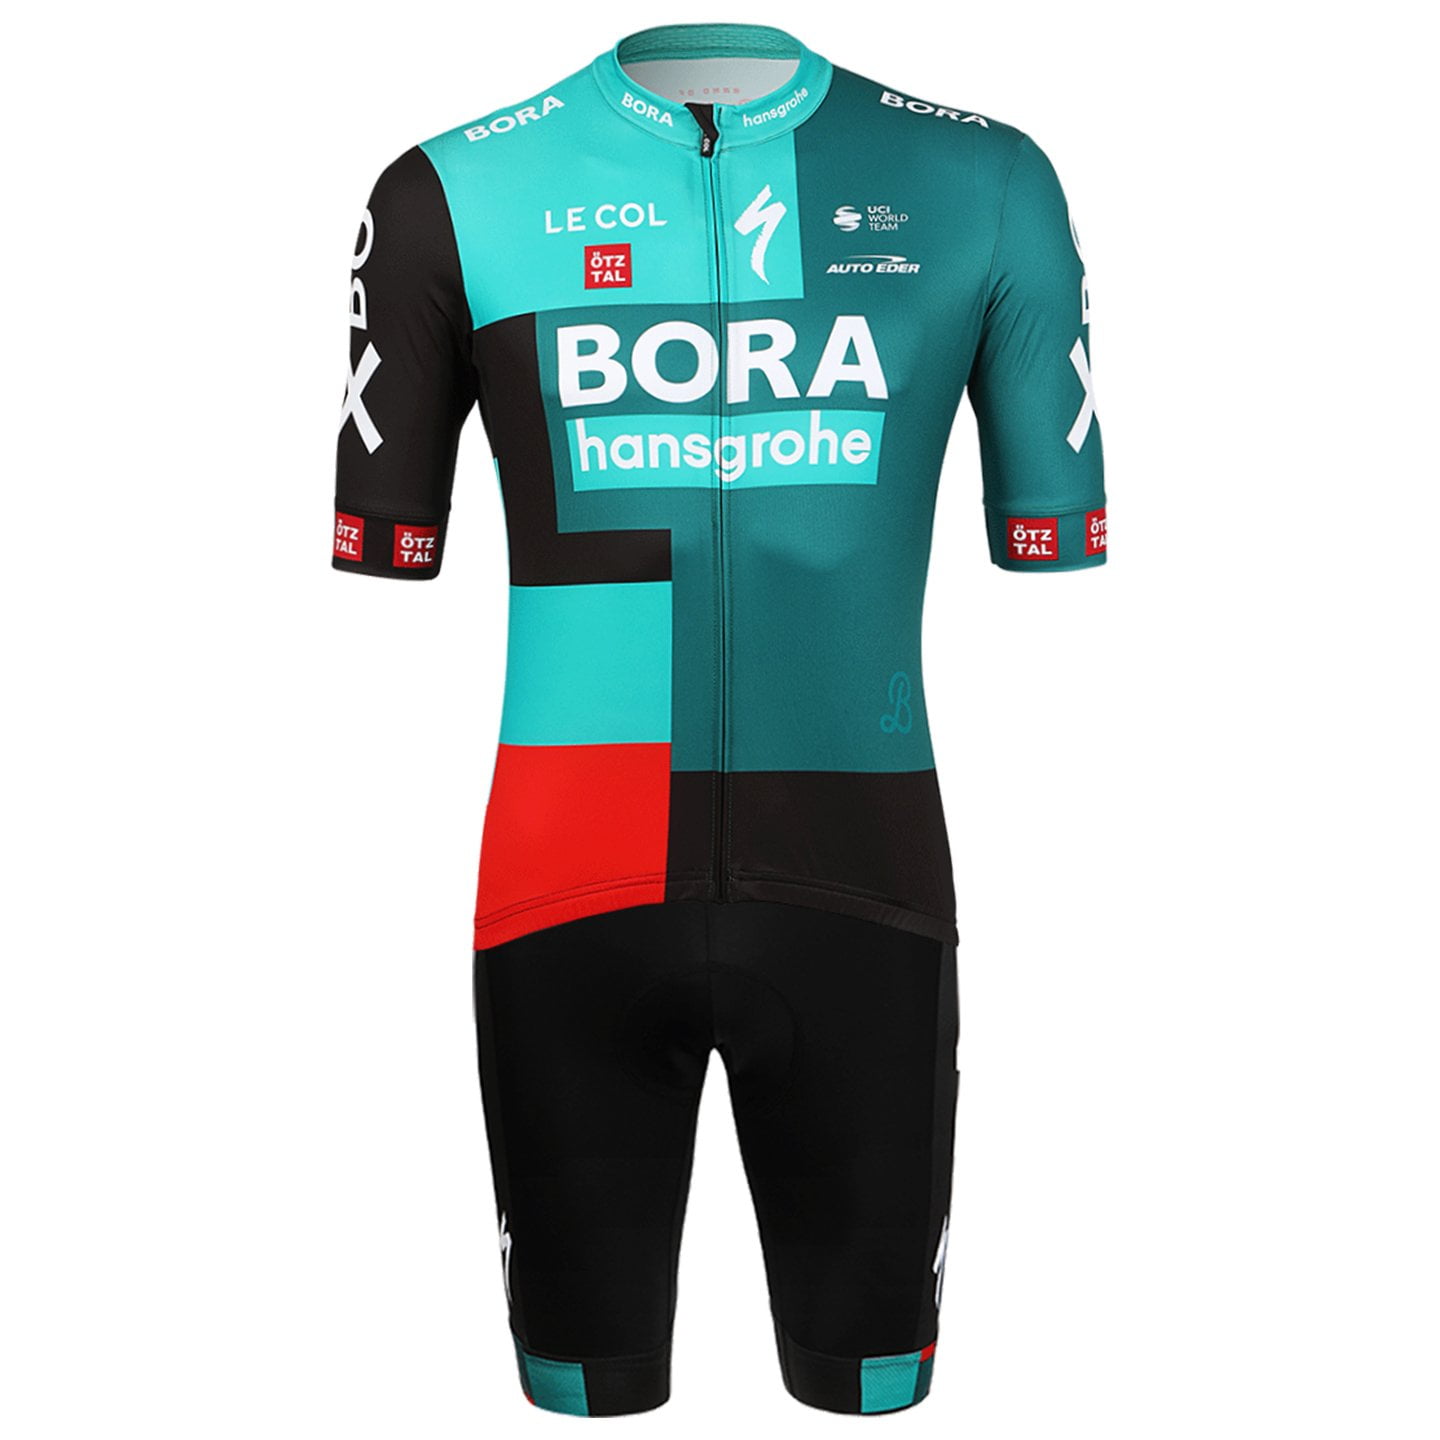 BORA-hansgrohe 2022 Set (cycling jersey + cycling shorts) Set (2 pieces), for men, Cycling clothing